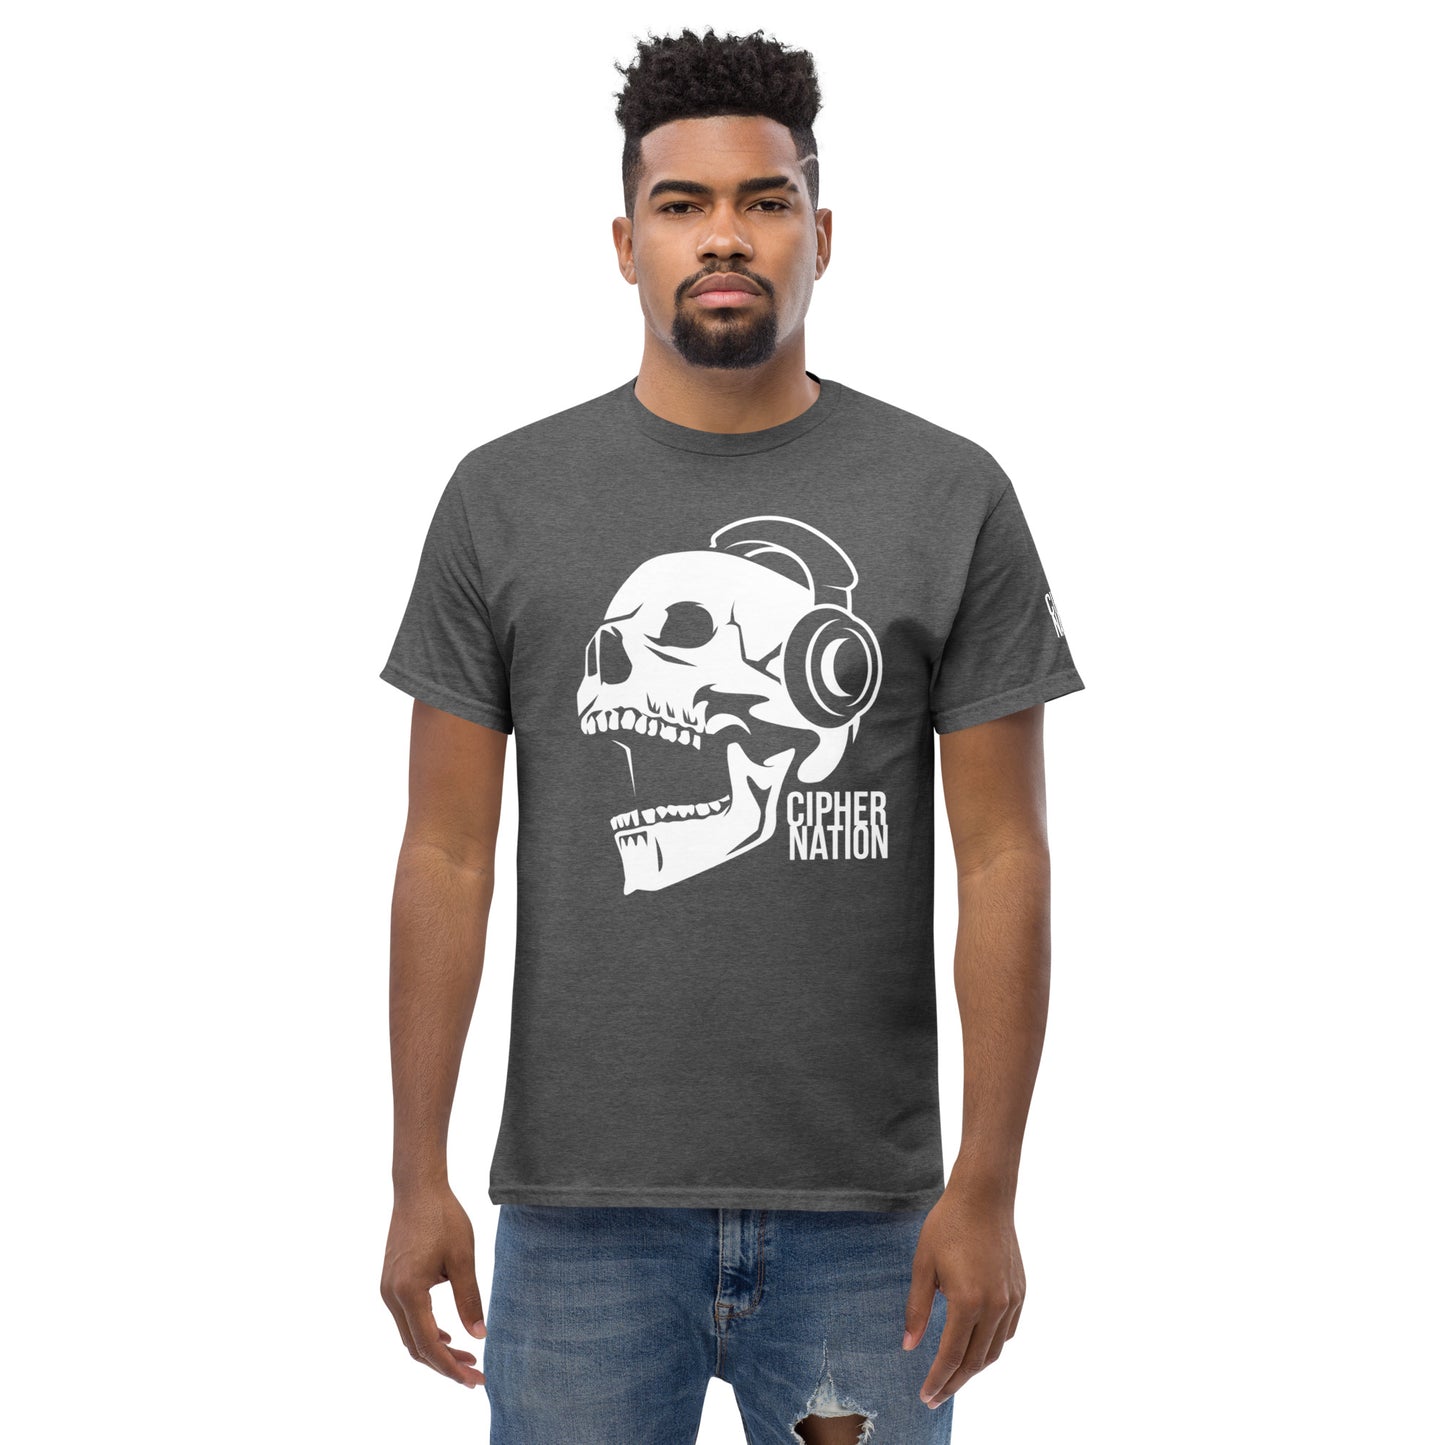 Cipher Nation T-Shirt - Mens